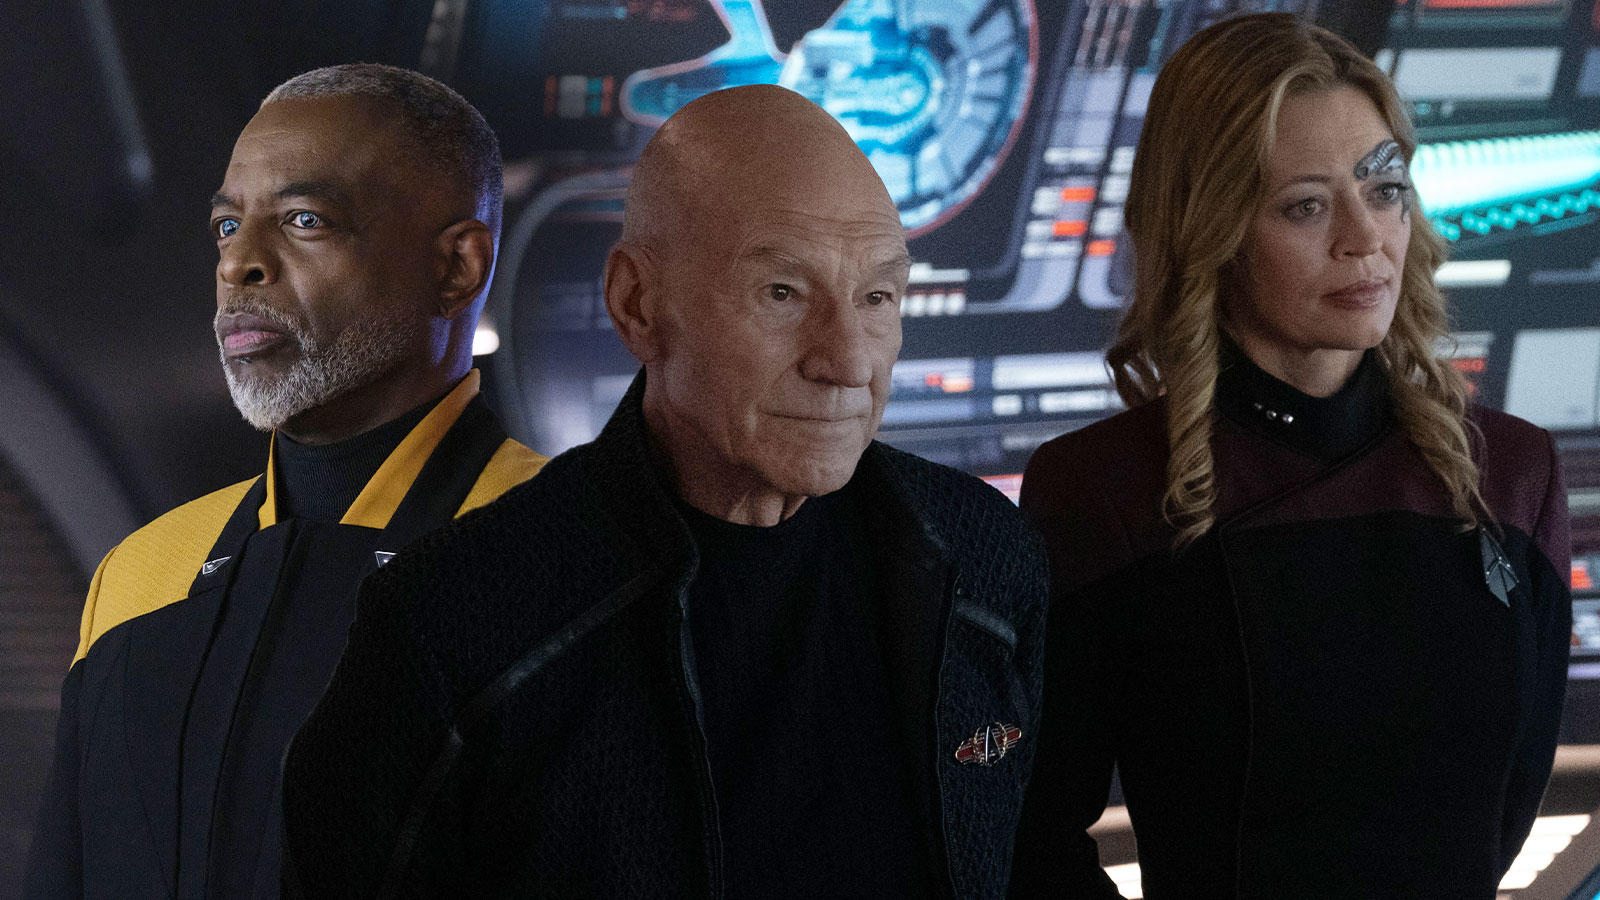 New photos + a sneak peek from Star Trek: Picard Season 3 Episode 6 "Bounty"